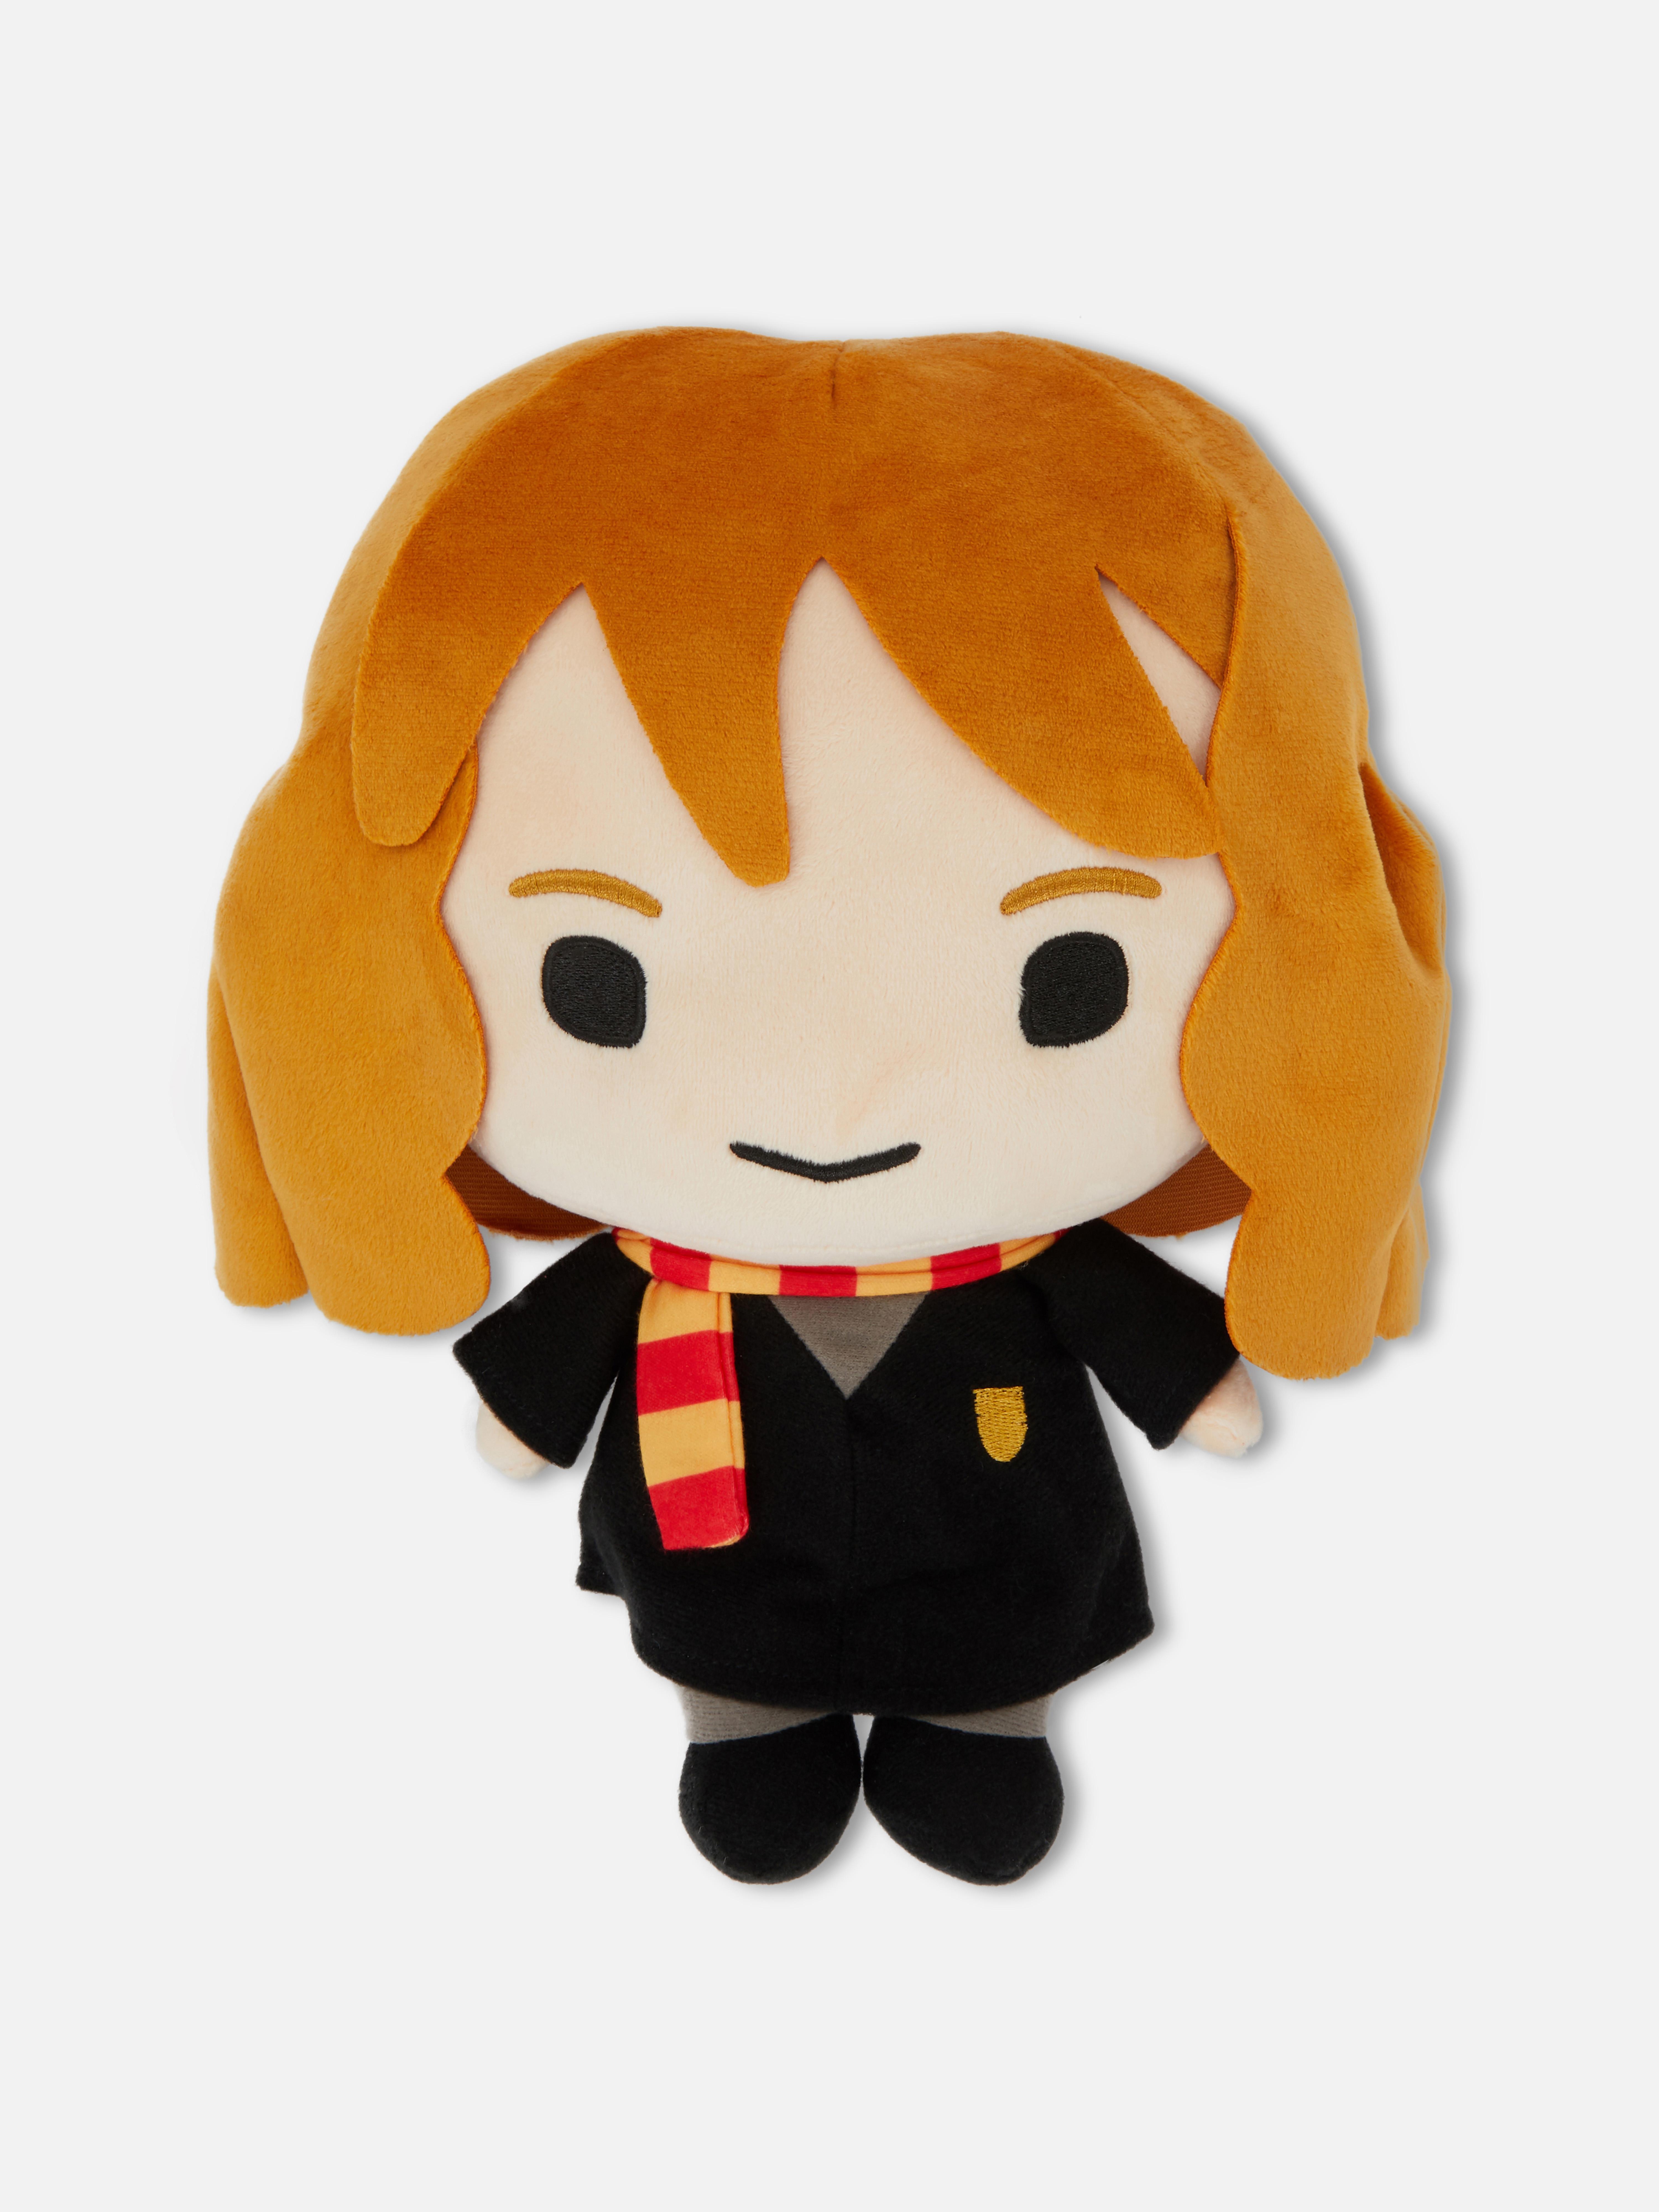 Harry Potter™ Hermione Granger Plush Toy